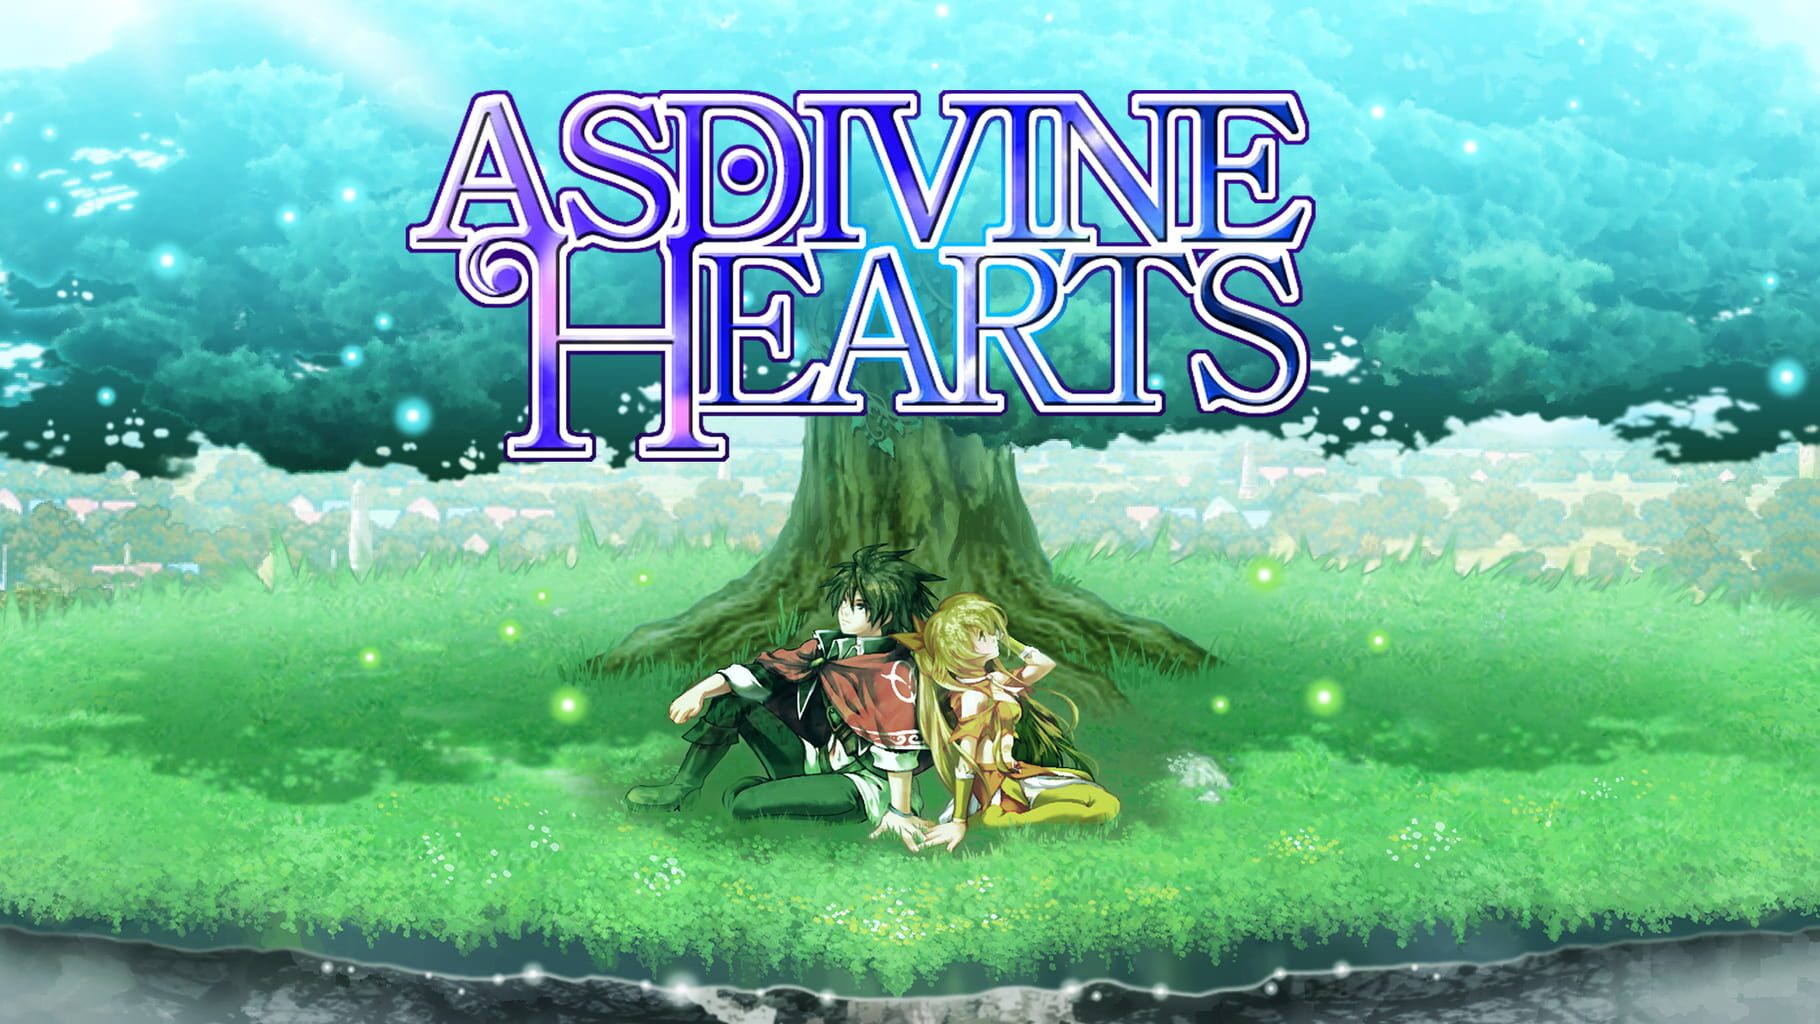 Asdivine Hearts artwork